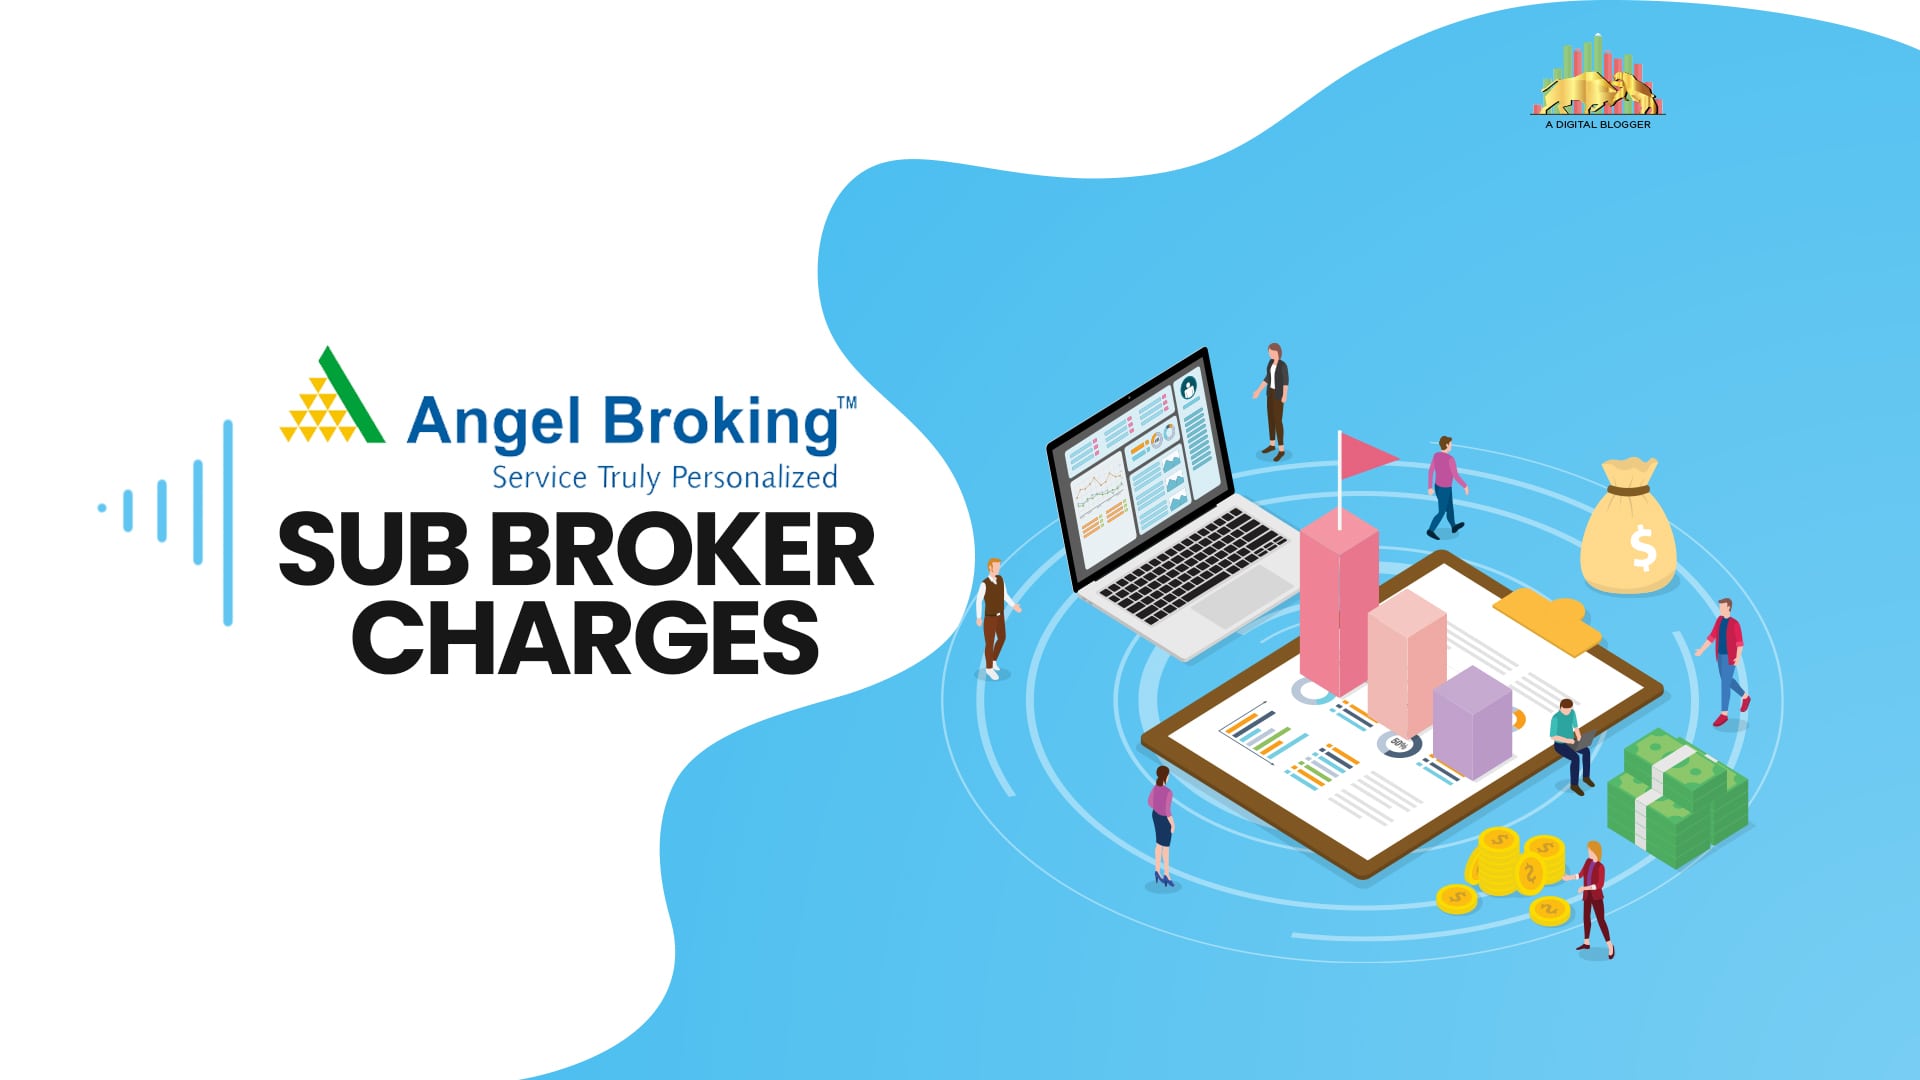 Angel Broking Sub Broker Charges